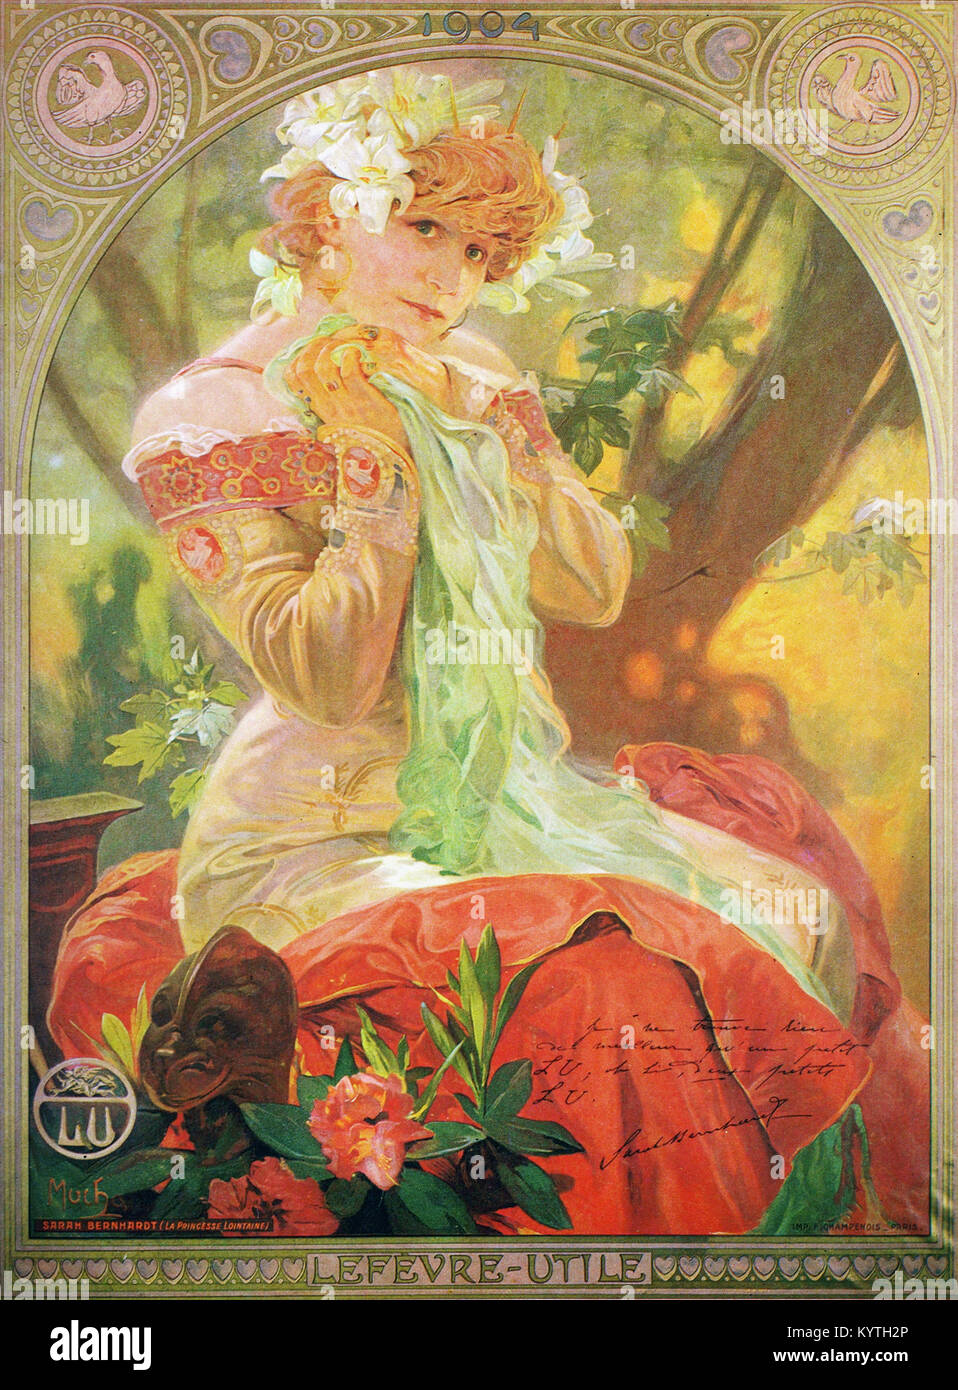 Alphonse Mucha (Alfons Maria) 1860 - 1939 Sarah Bernhardt - La Princesse Lointaine - Biscuit Lefèvre- Utile Stock Photo